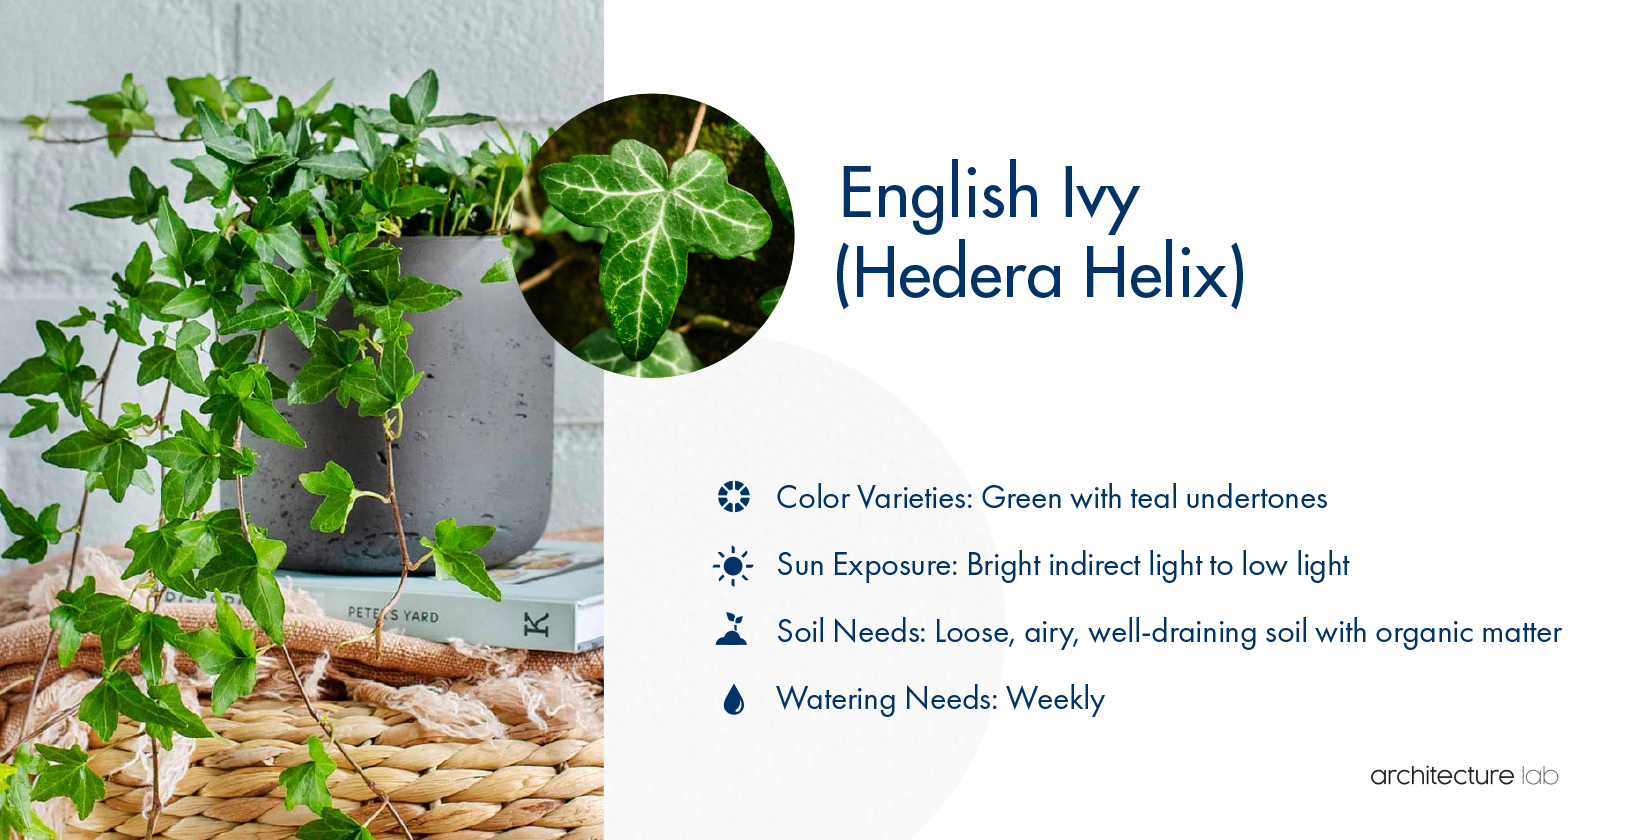 16. English ivy (hedera helix)